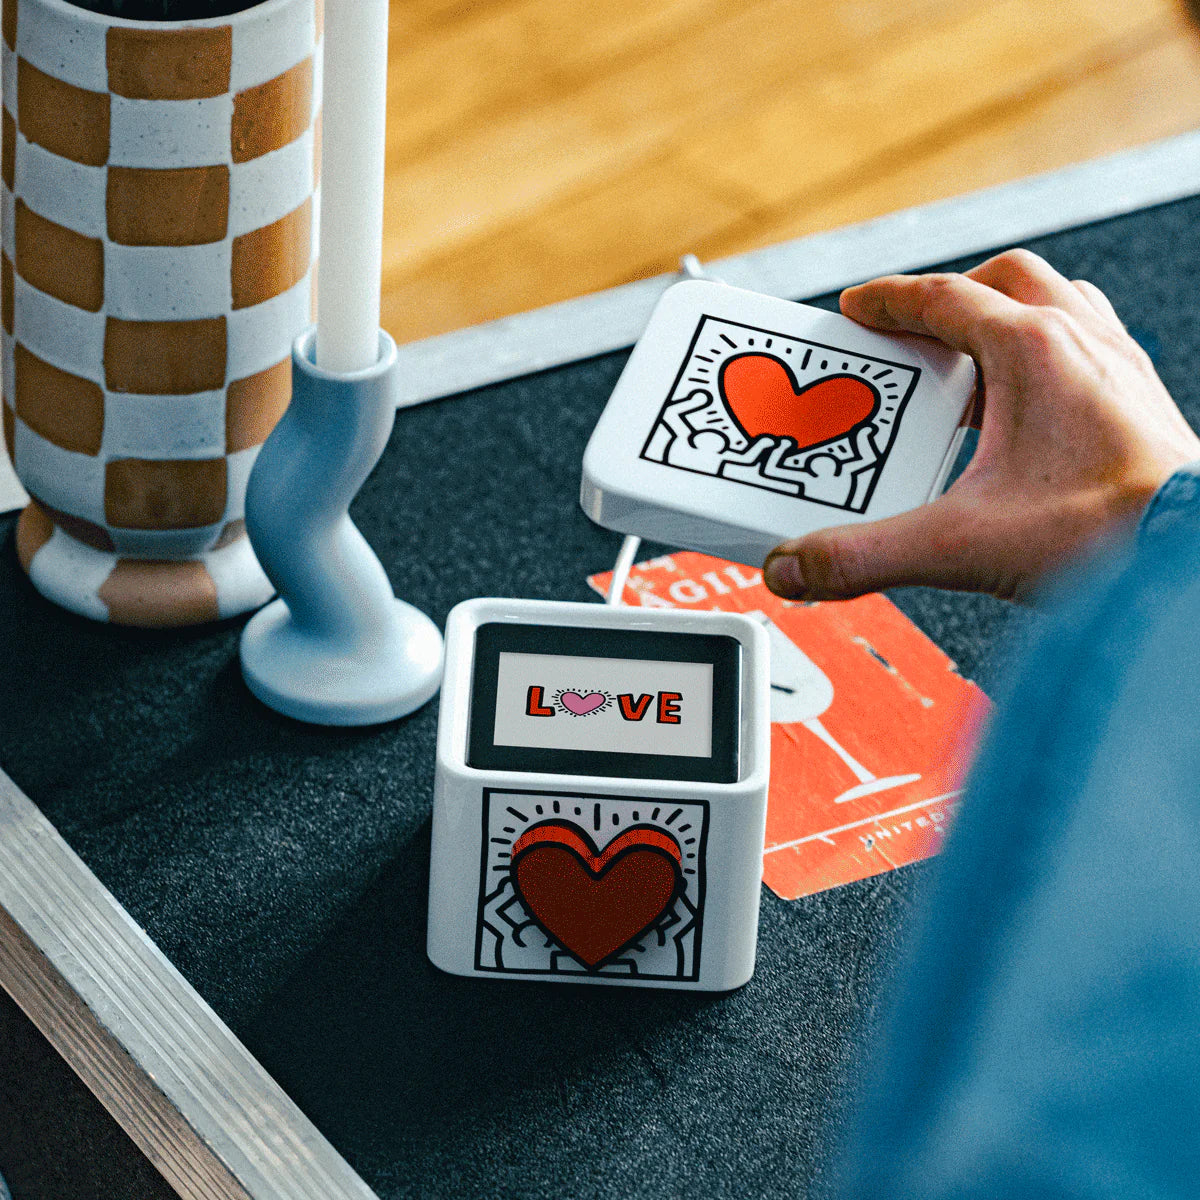 Keith Haring Lovebox Digital Messenger